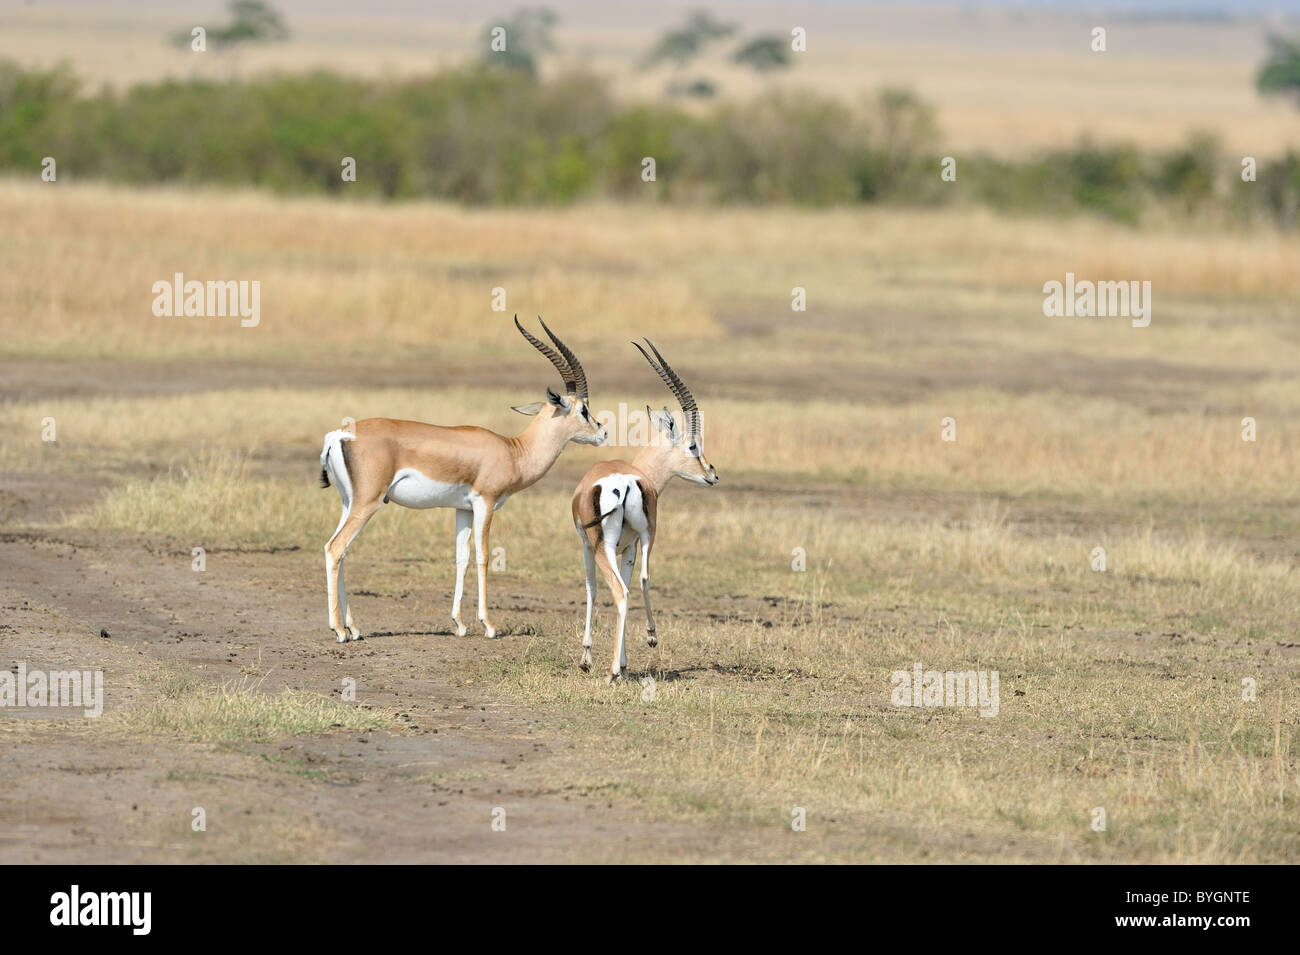 Grant's gazelle (Gazella granti - Nanger granti) pair standing in the savanna - Maasai Mara - Kenya - East Africa Stock Photo